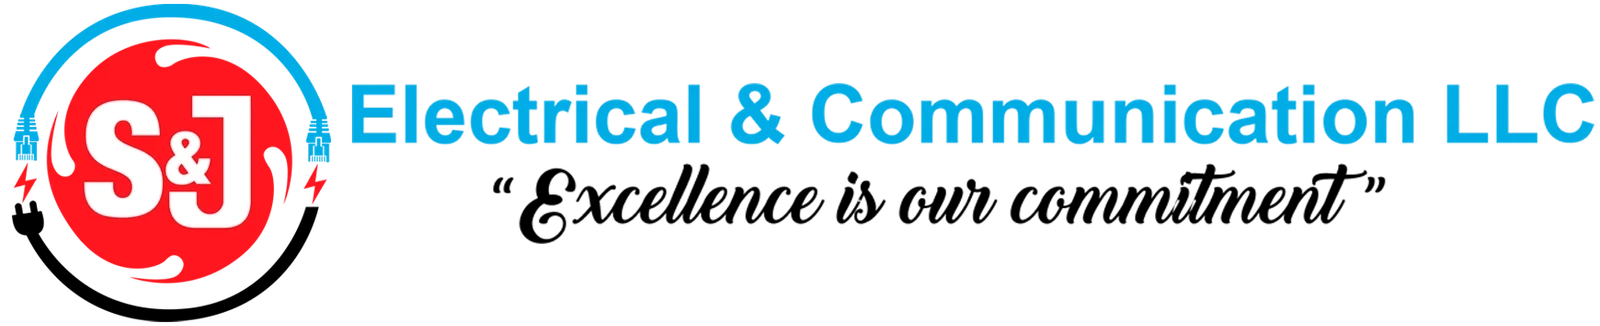 S&J Electrical & Communication, LLC Logo